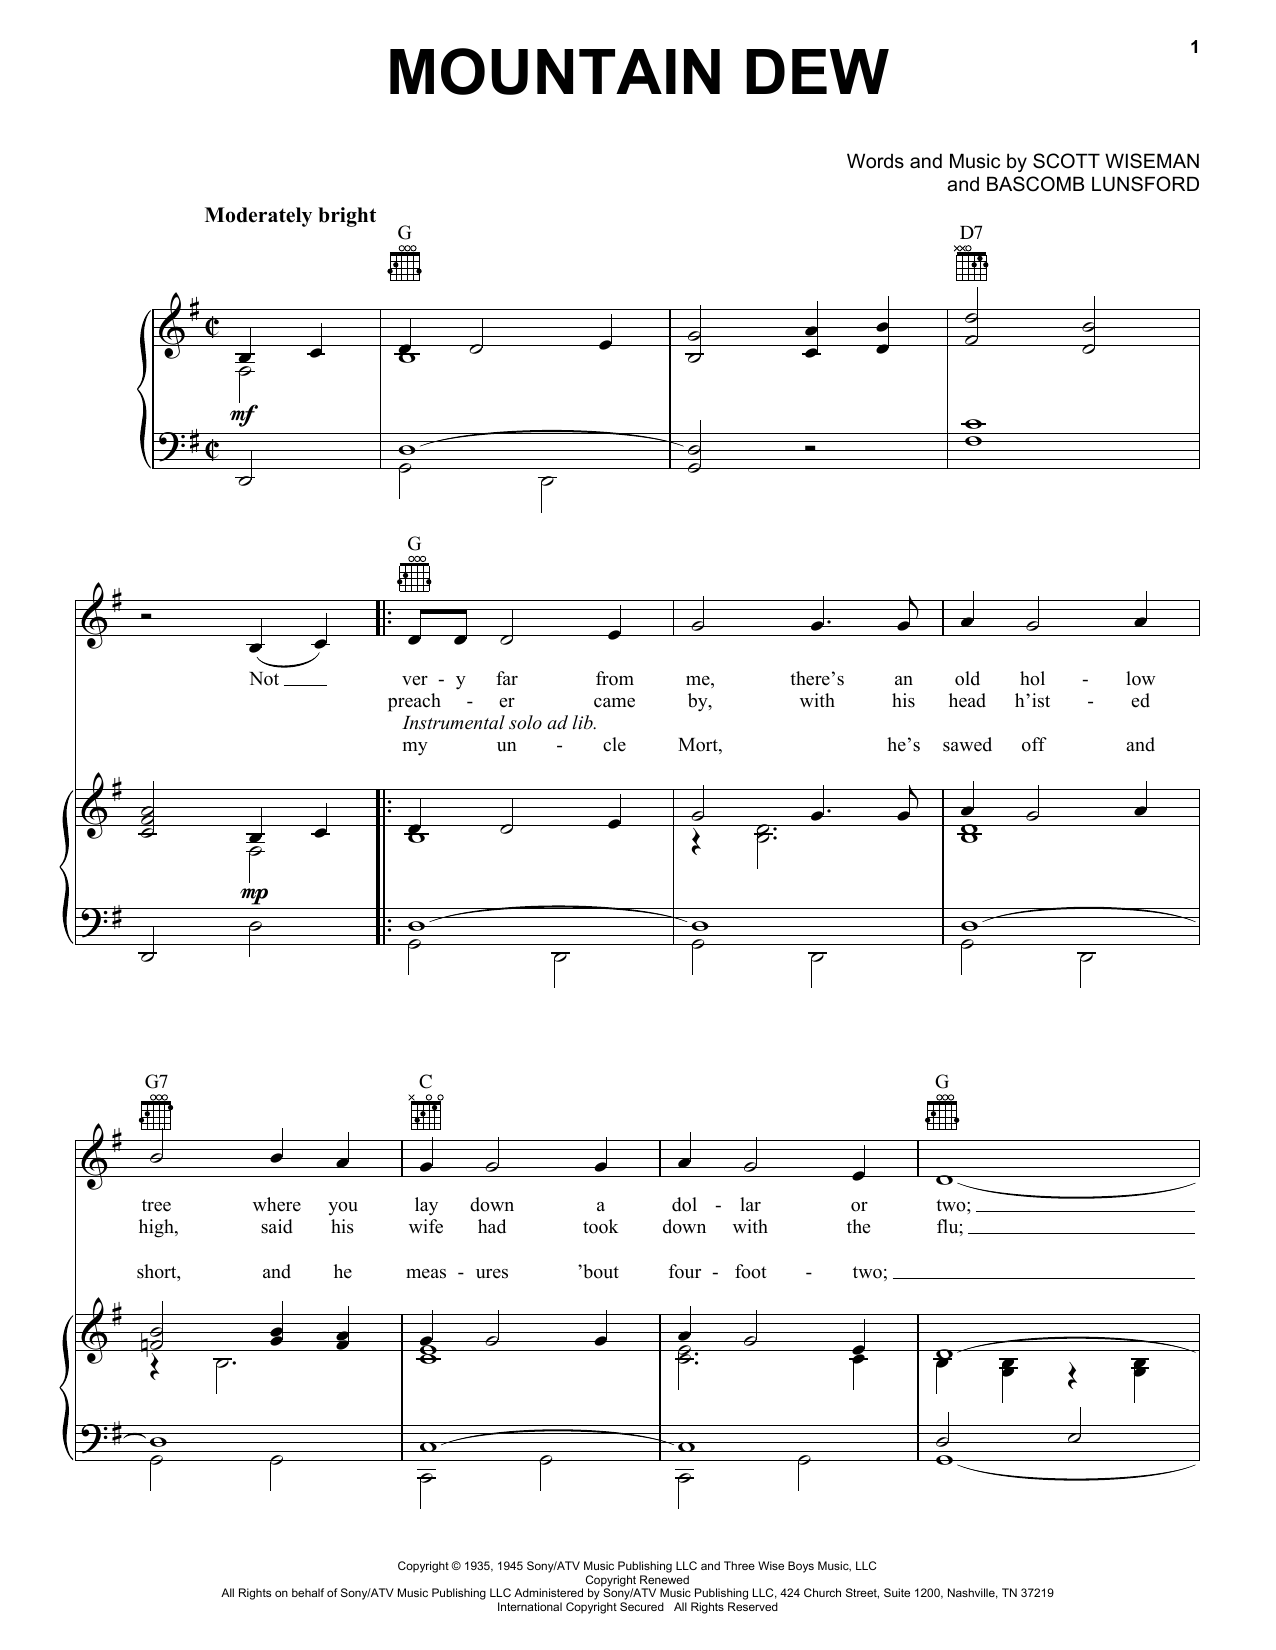 Grandpa Jones Mountain Dew Sheet Music Notes & Chords for Lyrics & Chords - Download or Print PDF